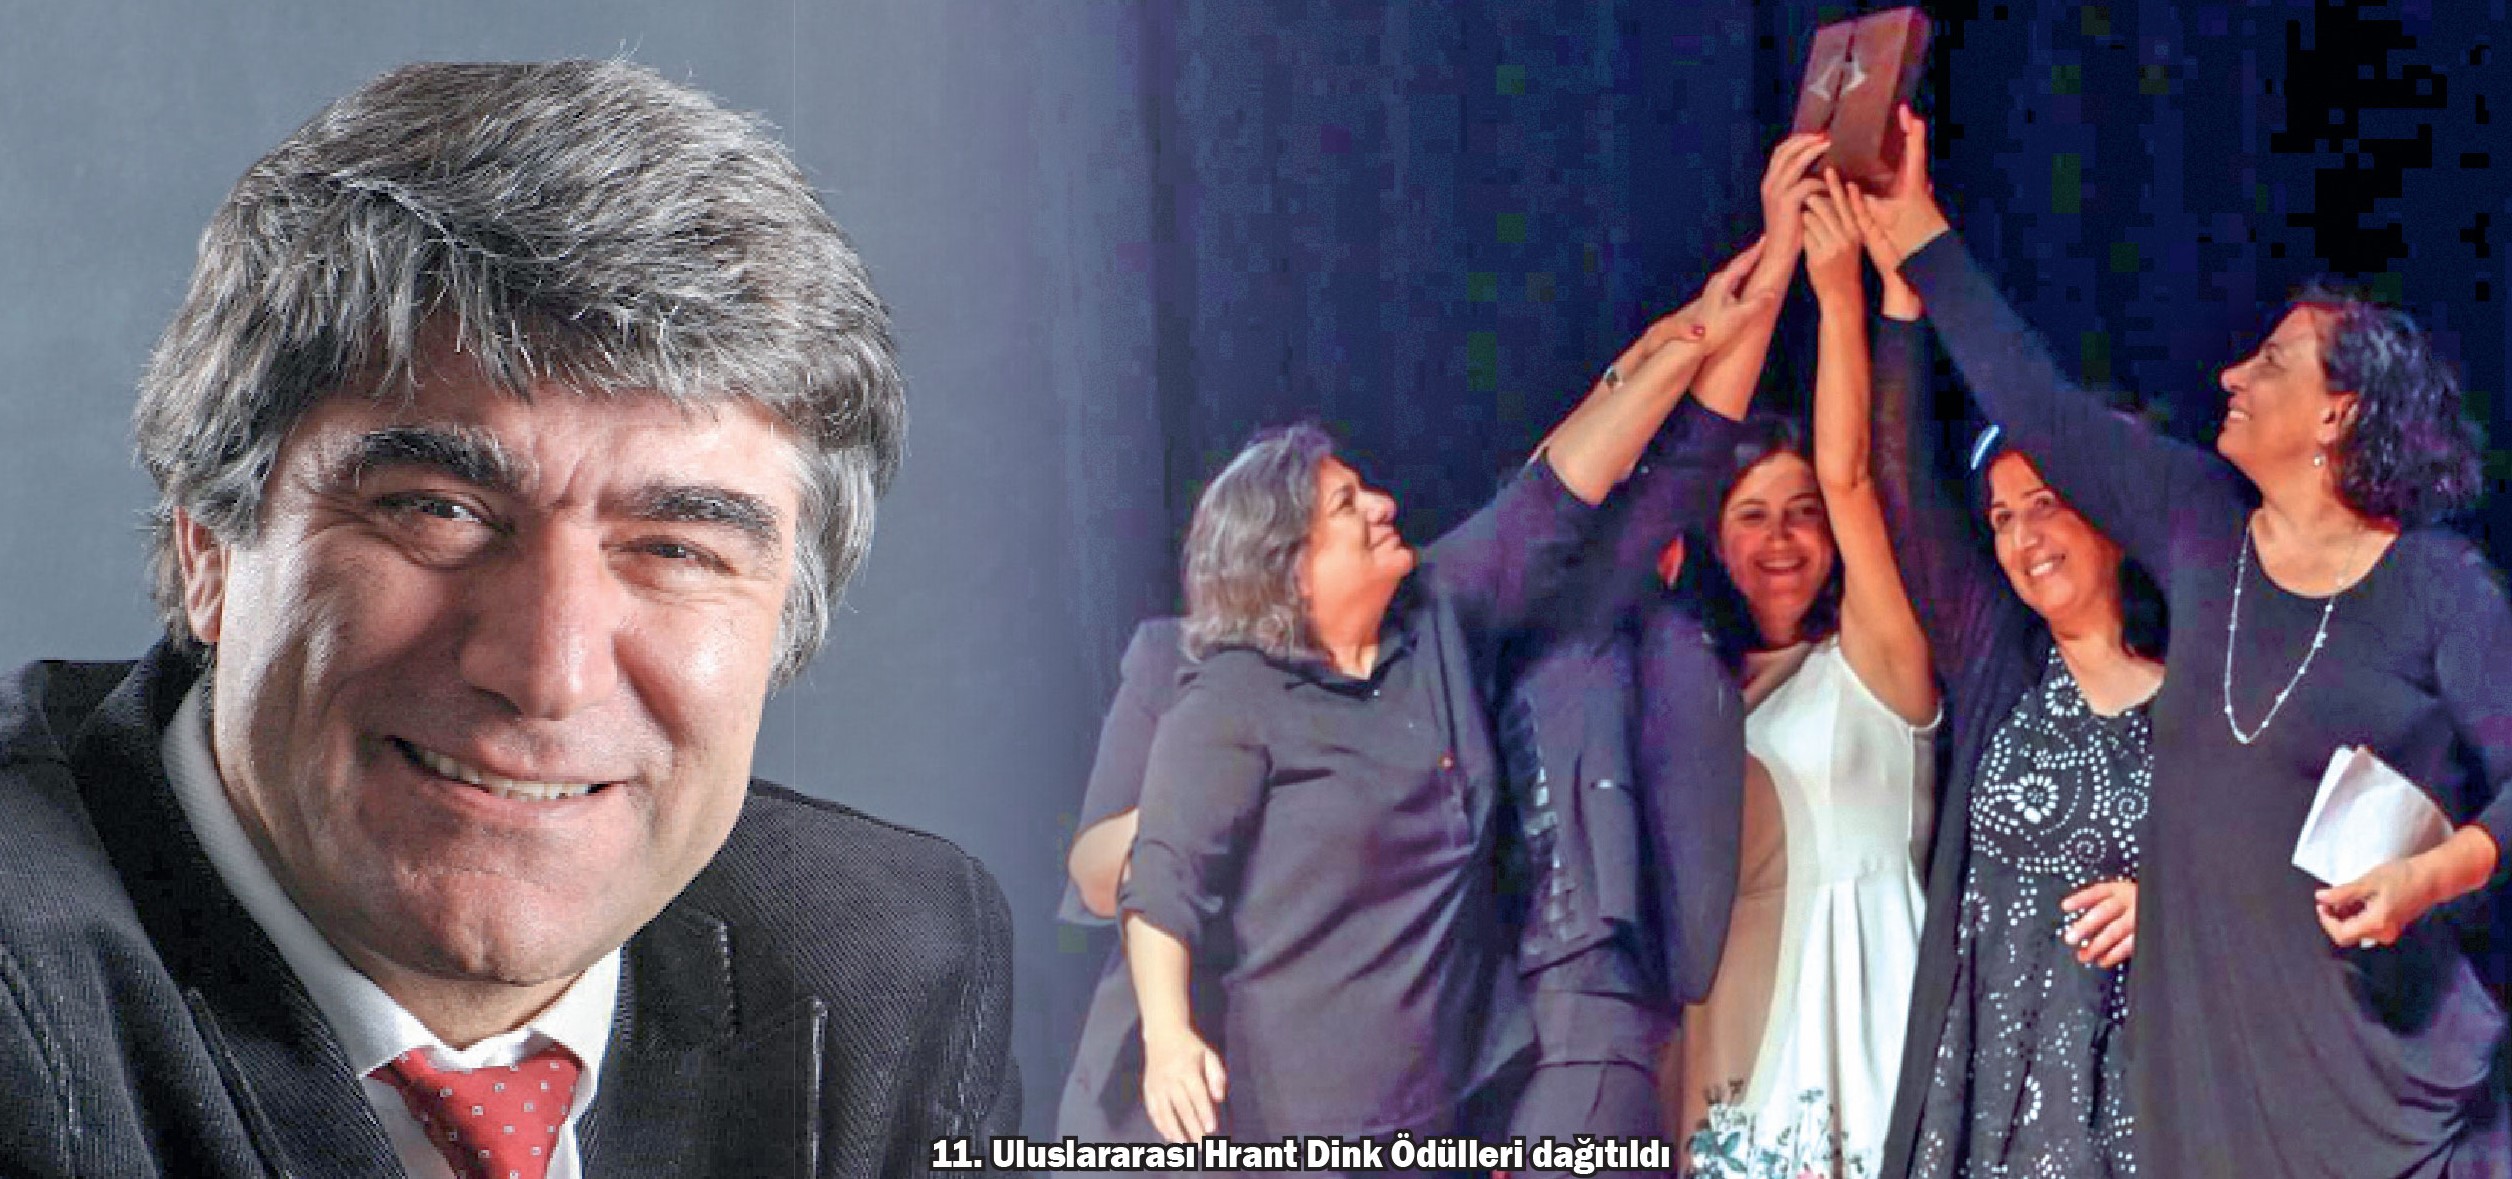 Uluslararas Hrant Dink dl